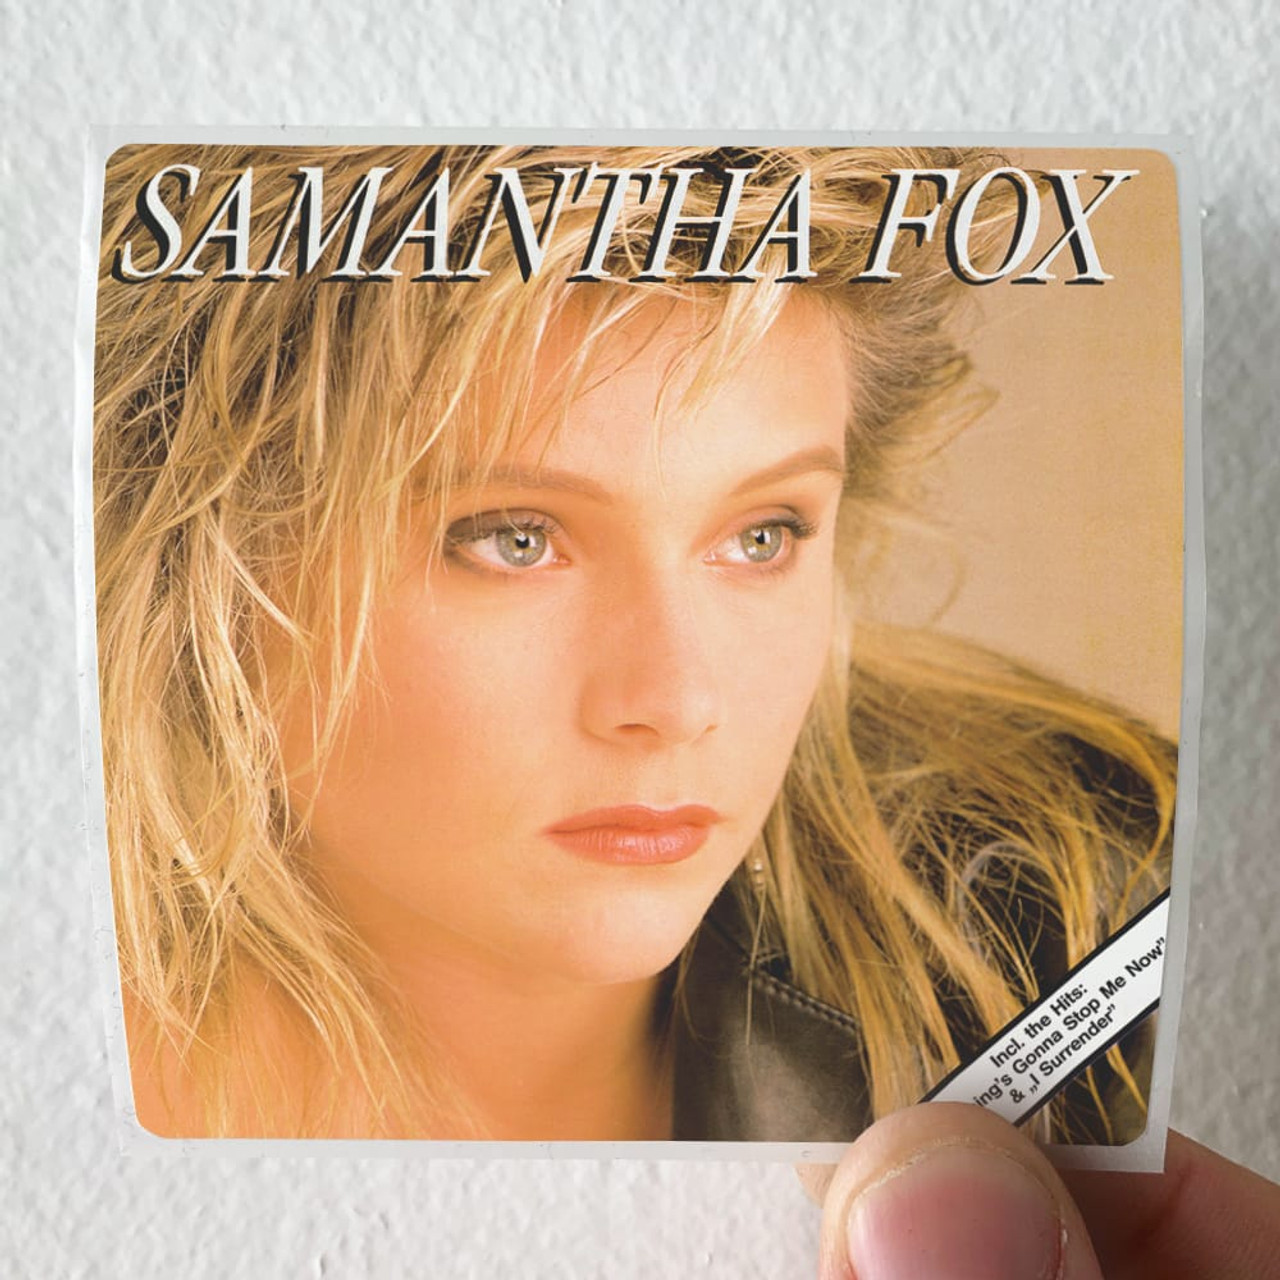 Samantha Fox Samantha Fox 2 Album Cover Sticker 